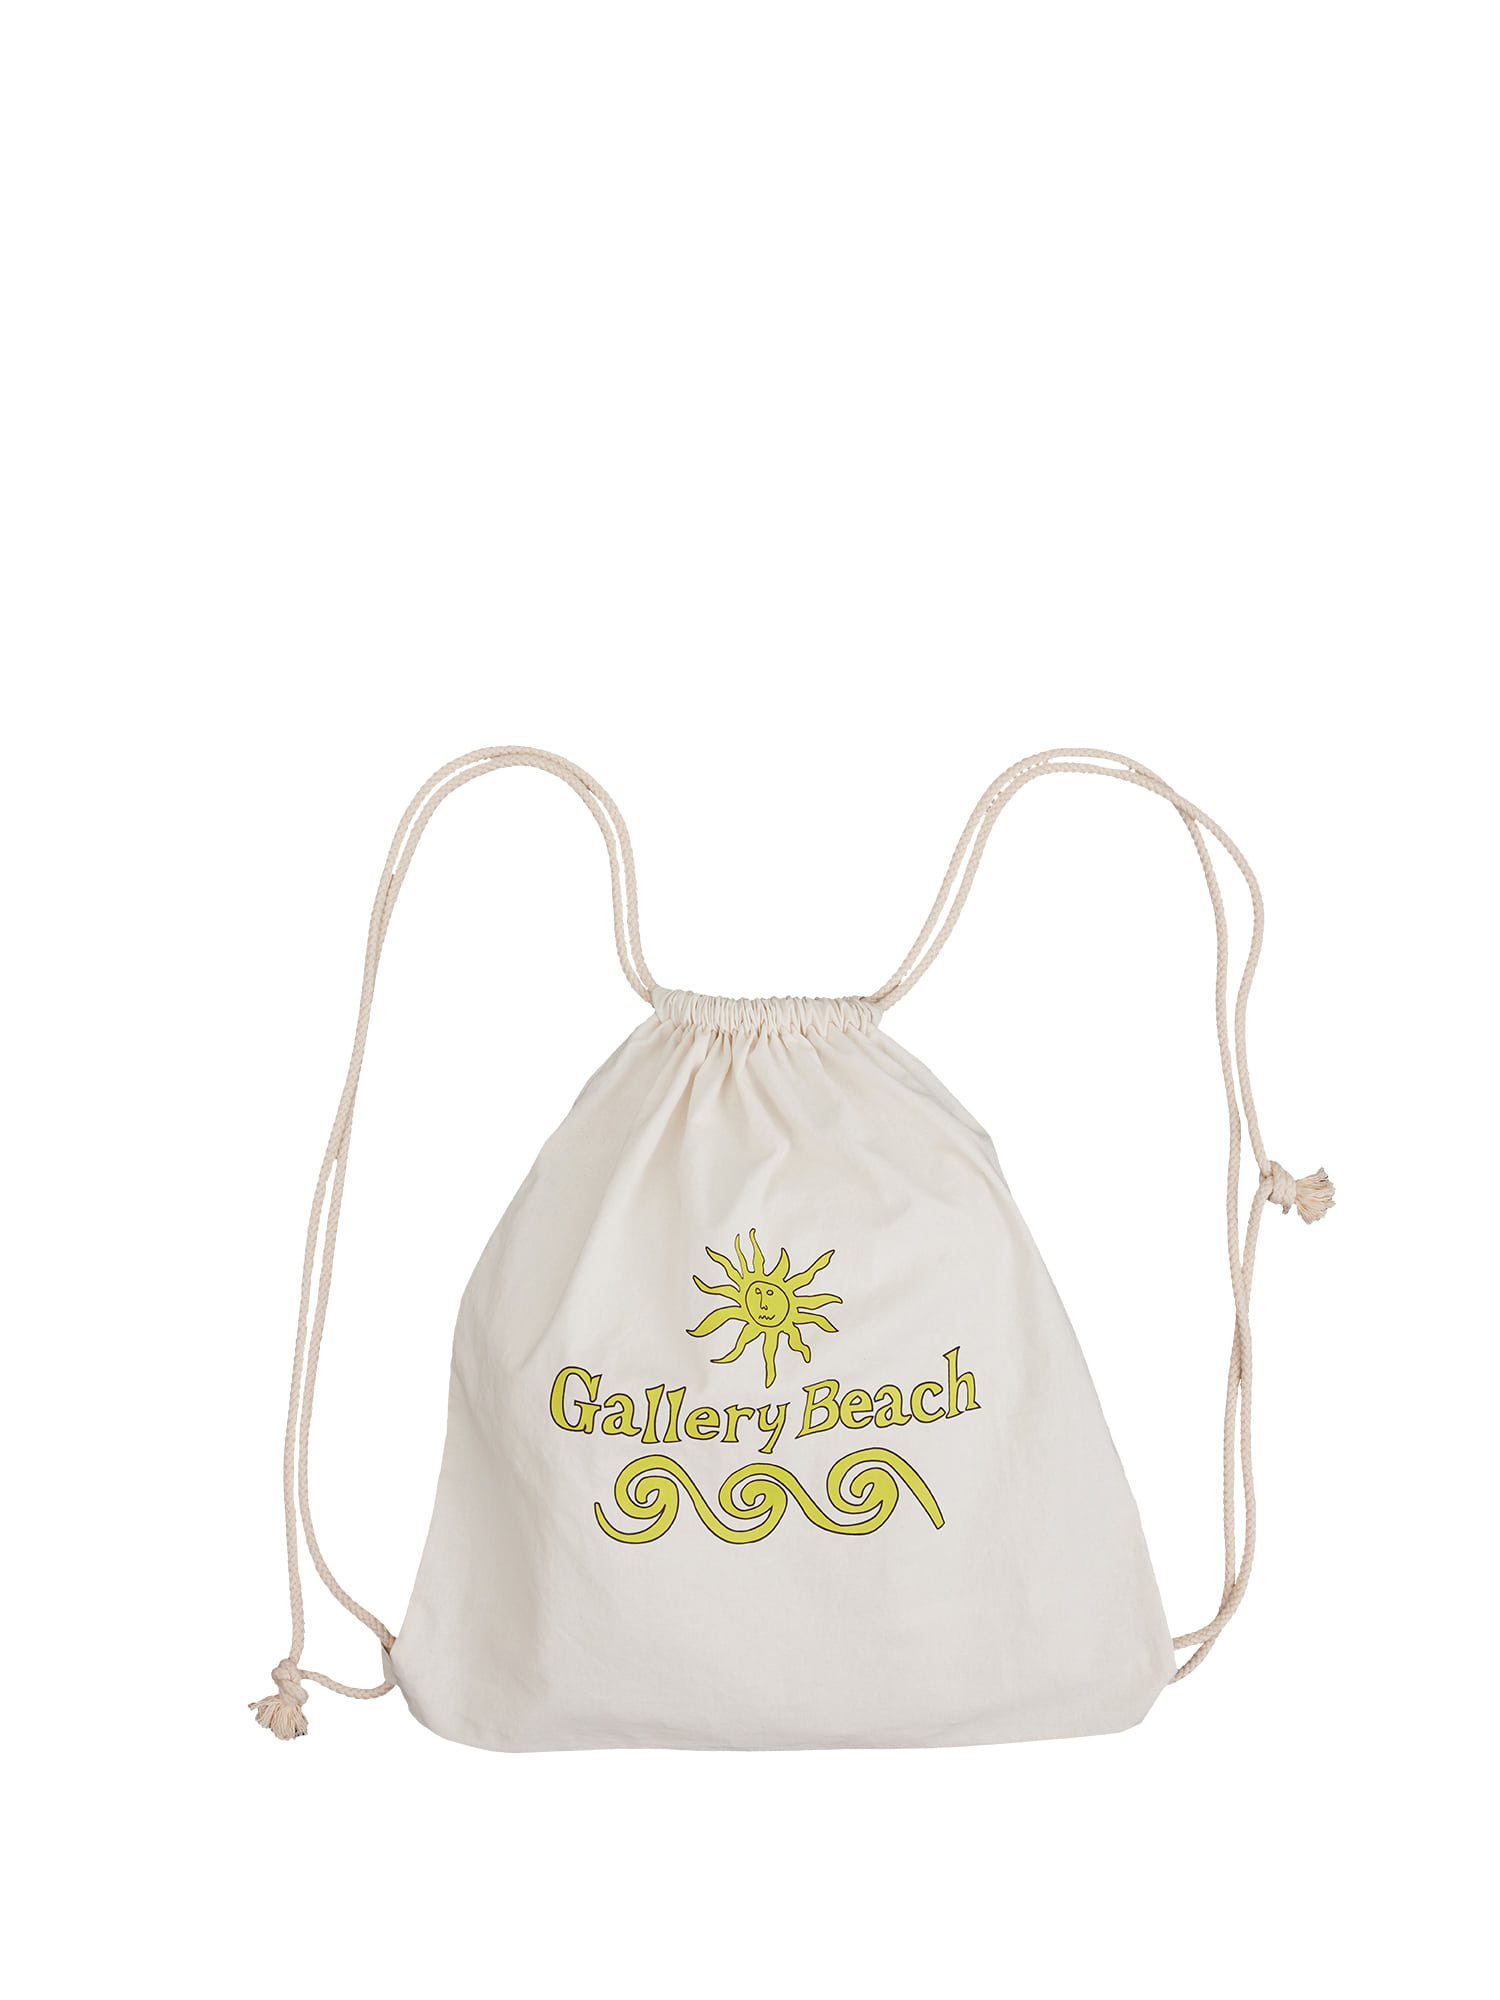 Gallery Beach Cotton Bag - Ivory